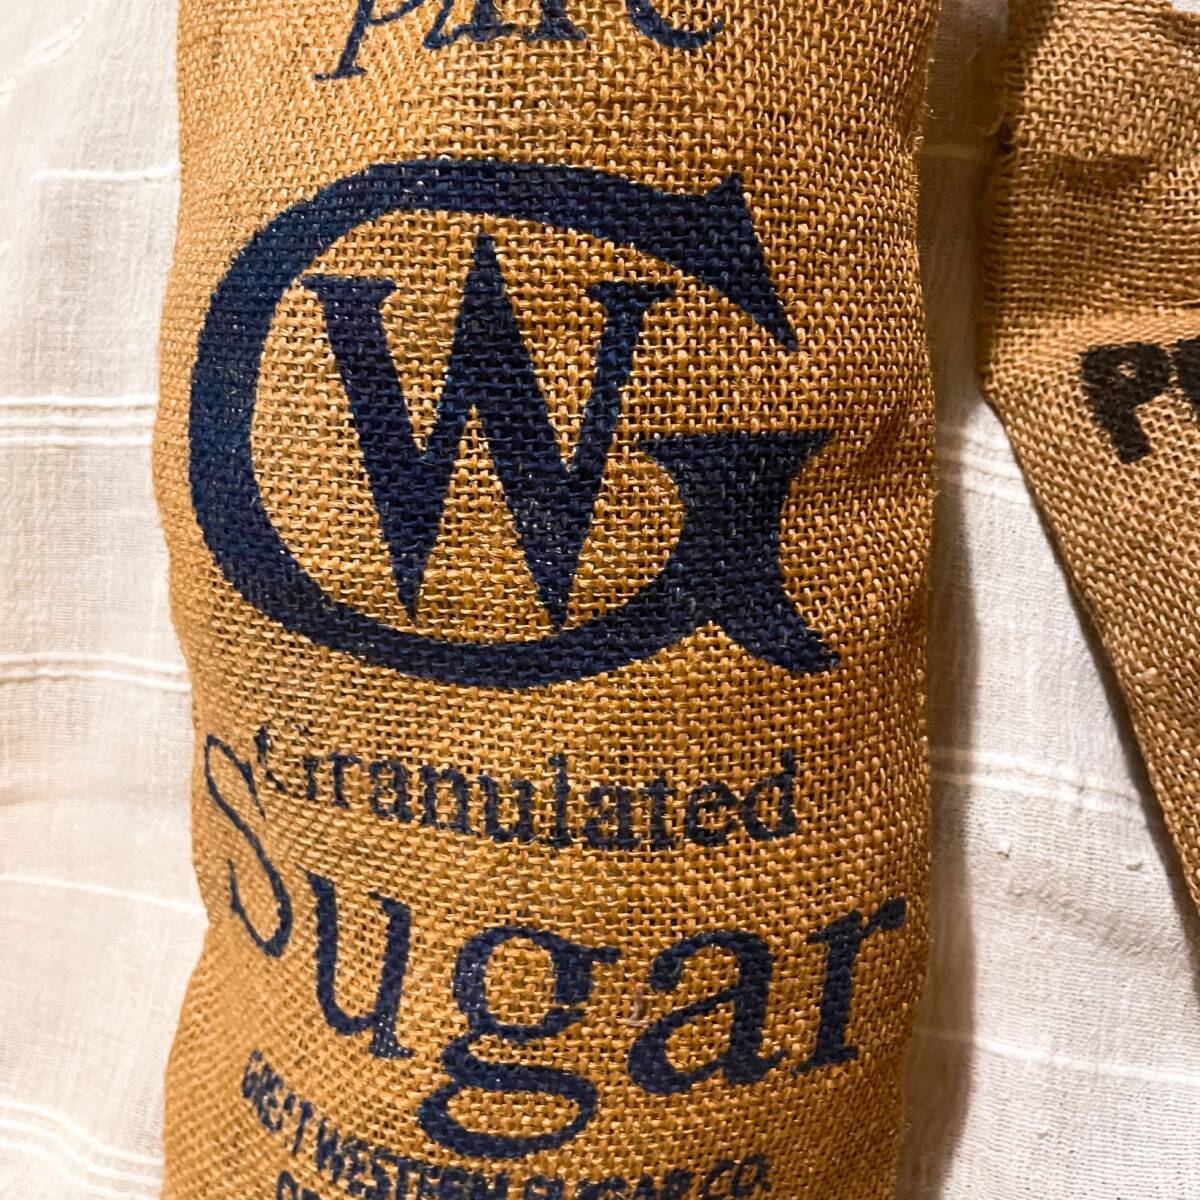 *SALE! Jute Bag jute сумка Mr.PEANUTS Sugar 2 шт. комплект! Mr. Peanuts смешанные товары Ame игрушка интерьер Vintage античный 